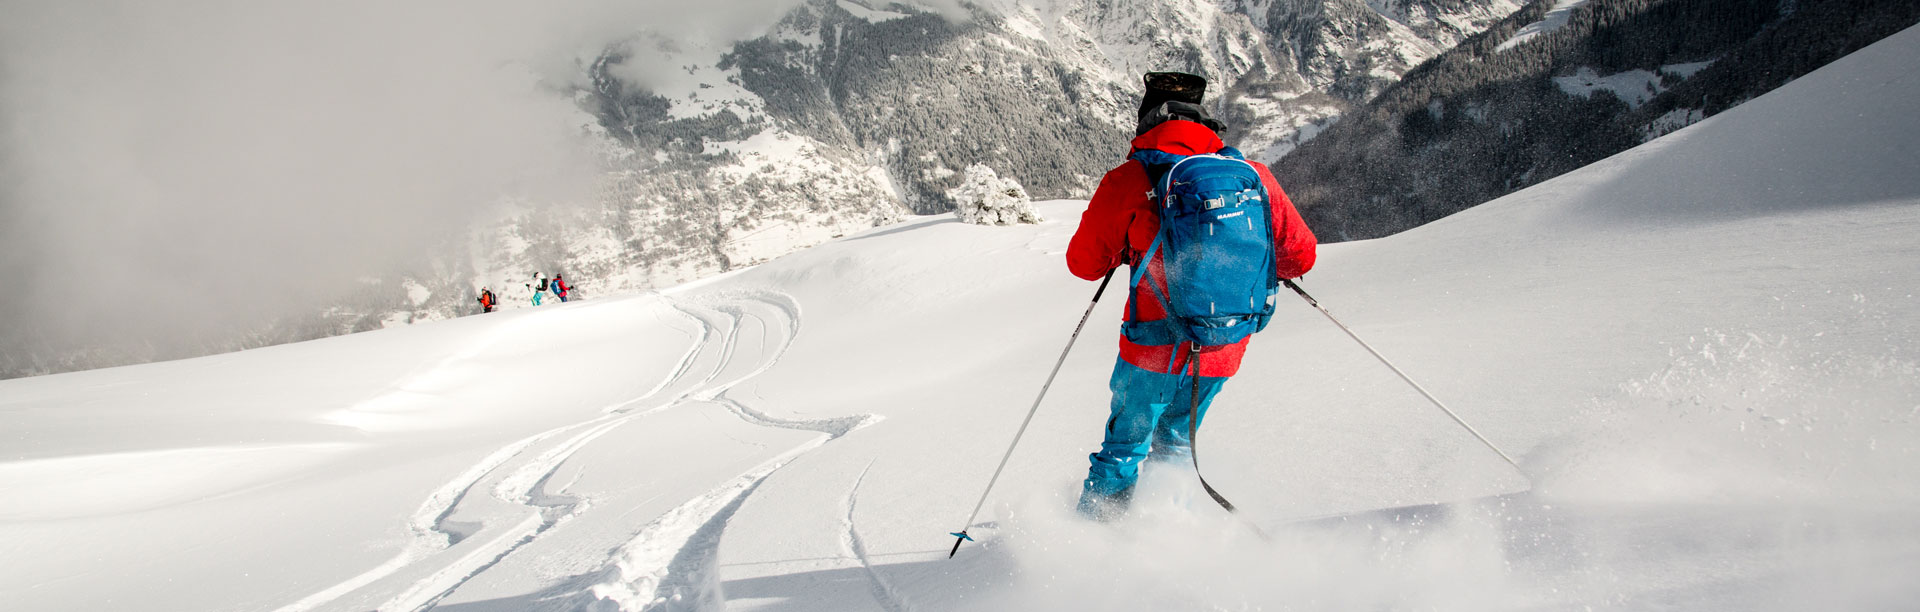 Luxury ski touring | Vacations in the Alps | Swiss Ski Safari